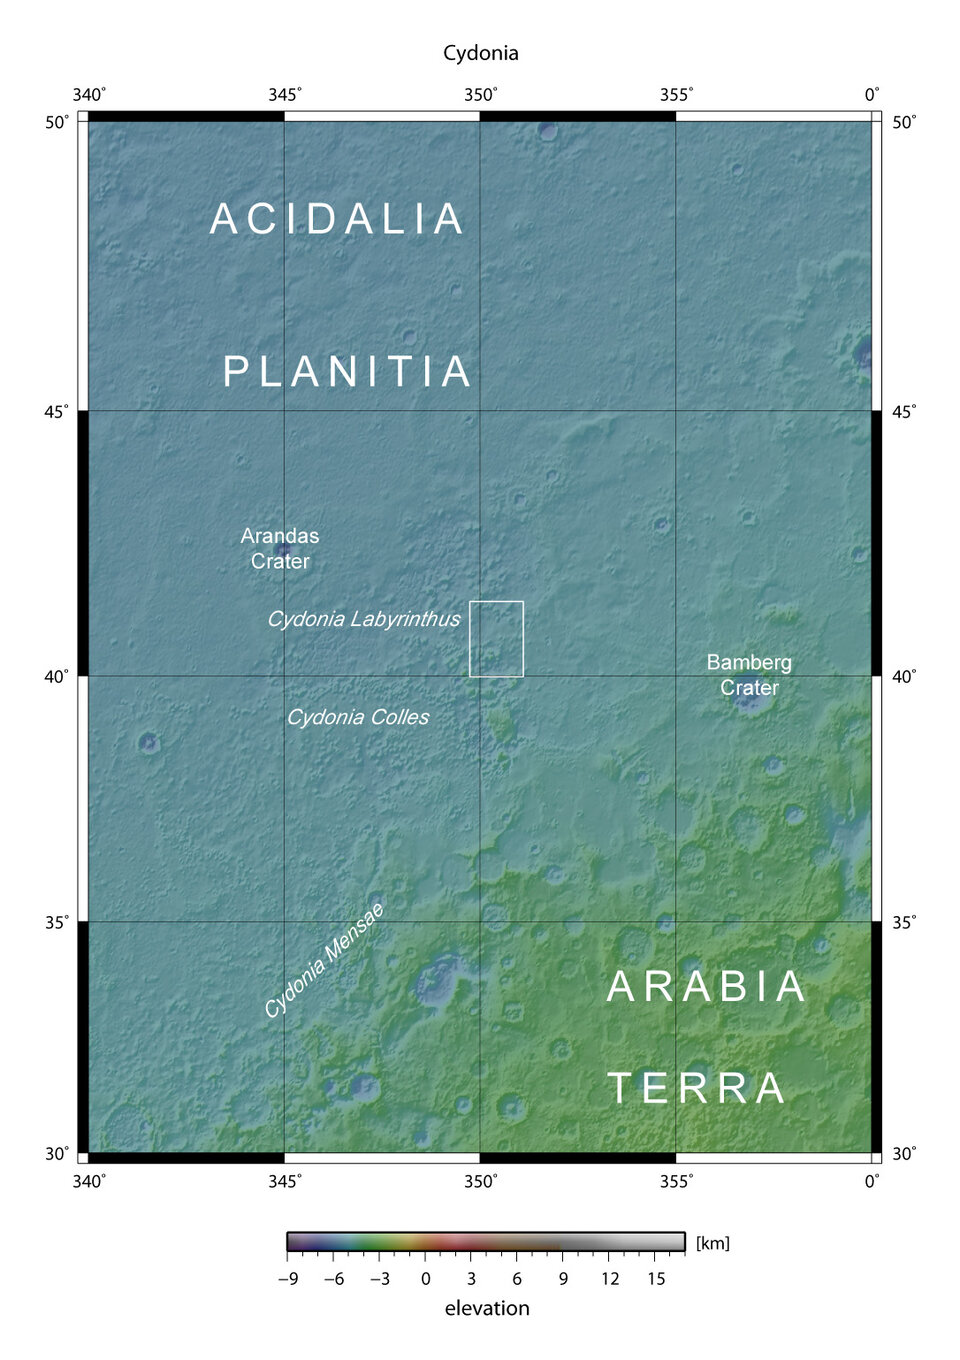 Cydonia region context map